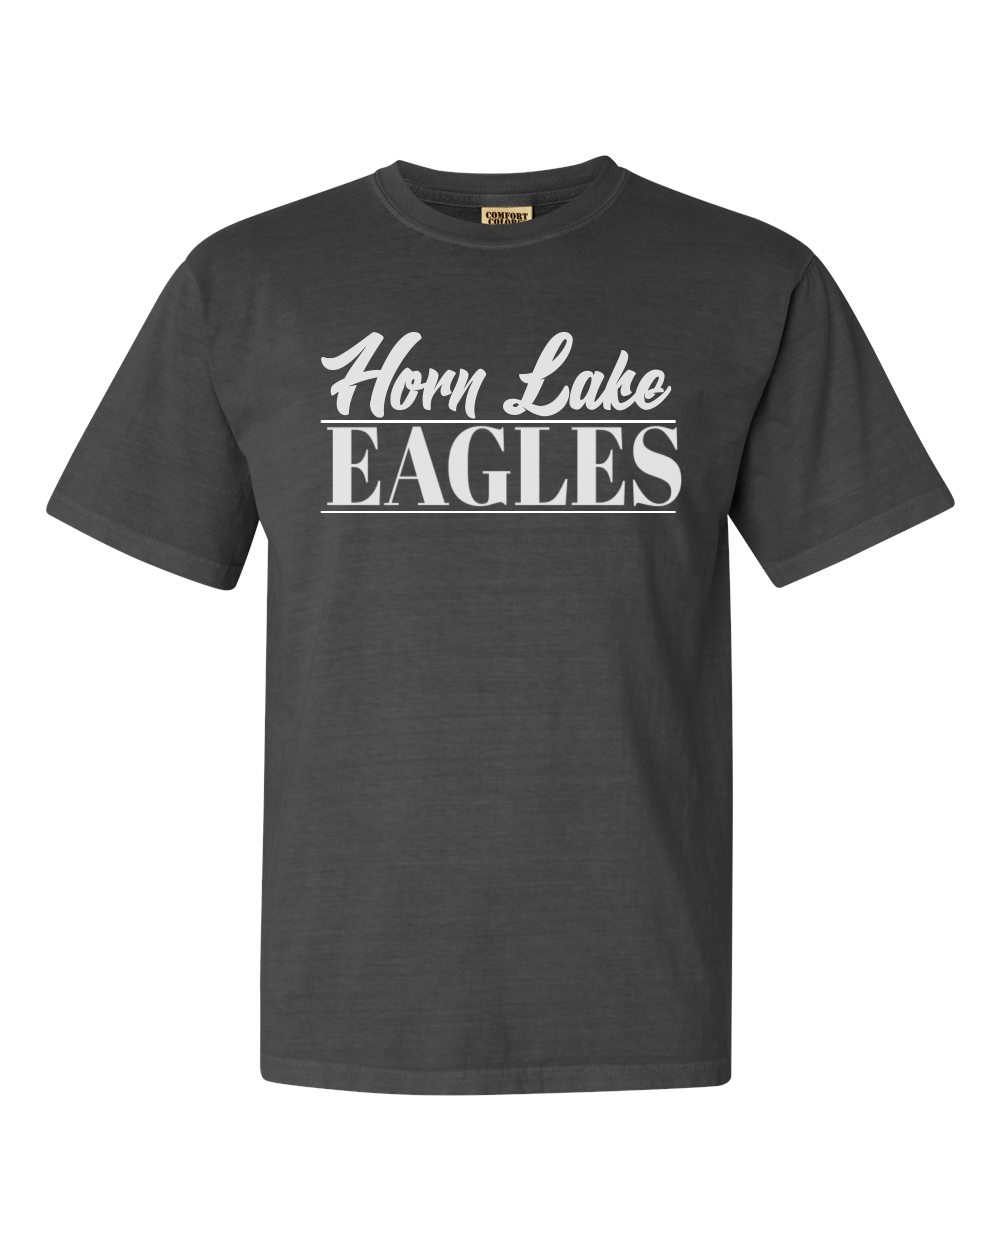 Horn Lake Eagles Comfort Colors Tees